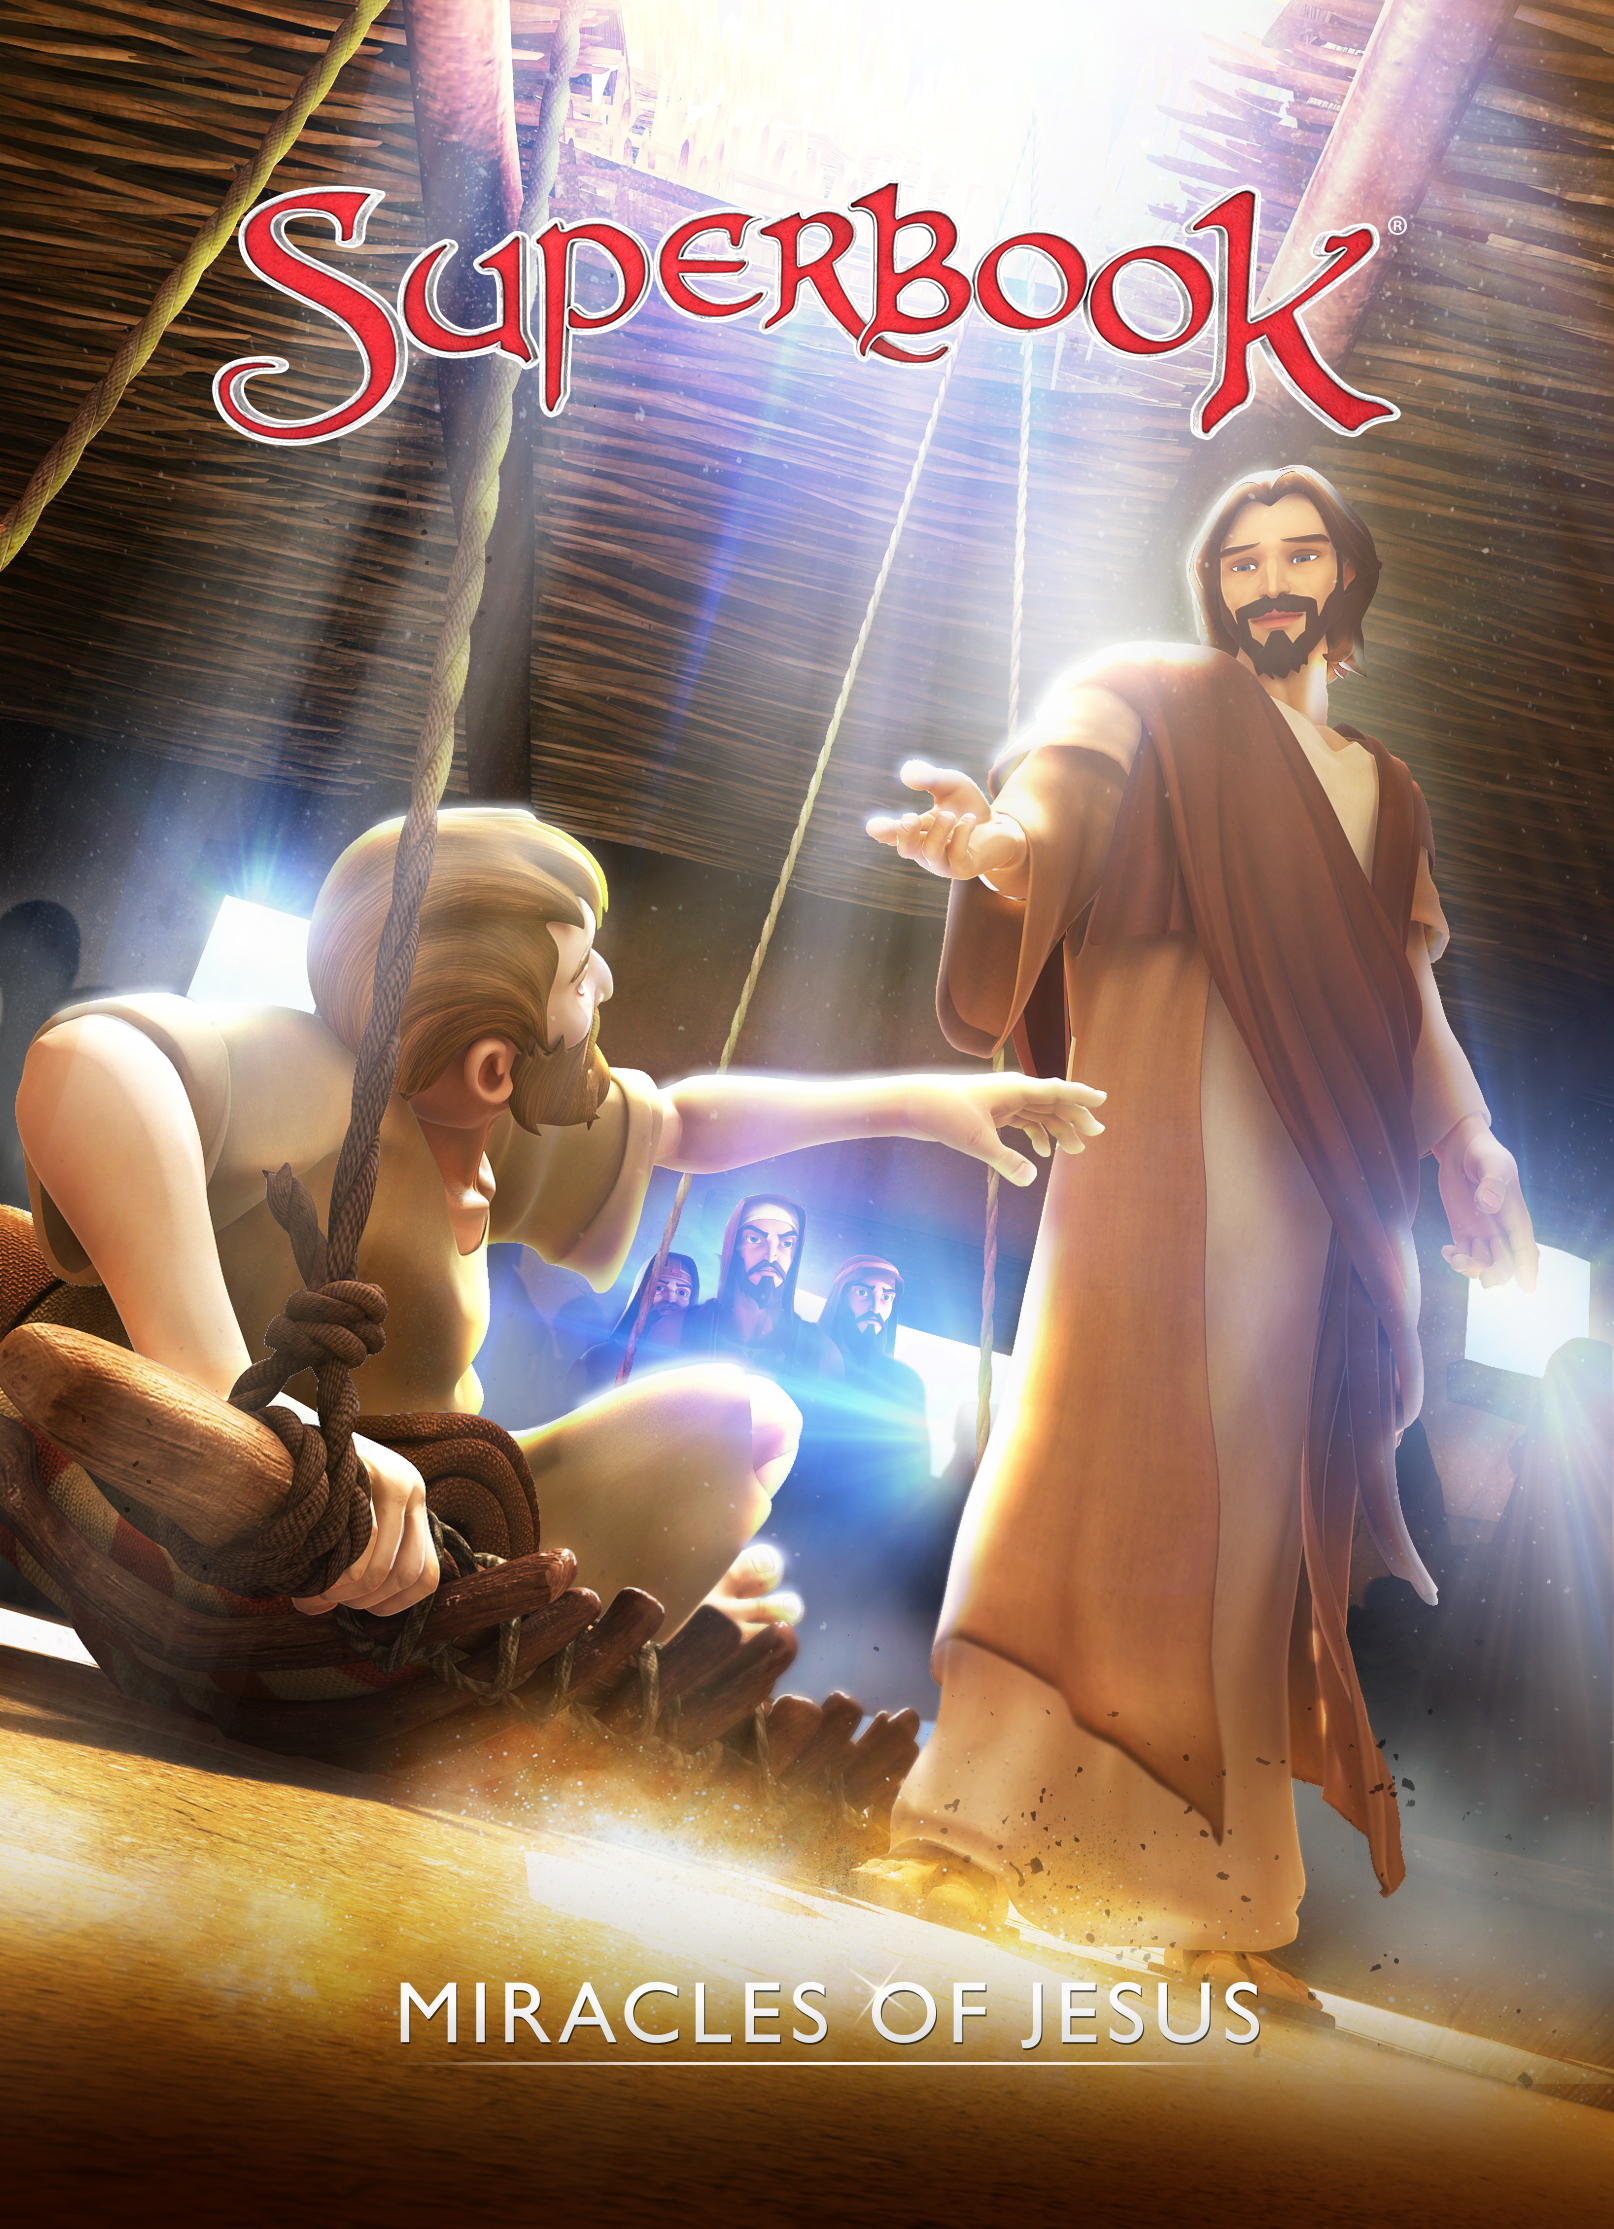 Superbook Episode 109 Miracles of Jesus